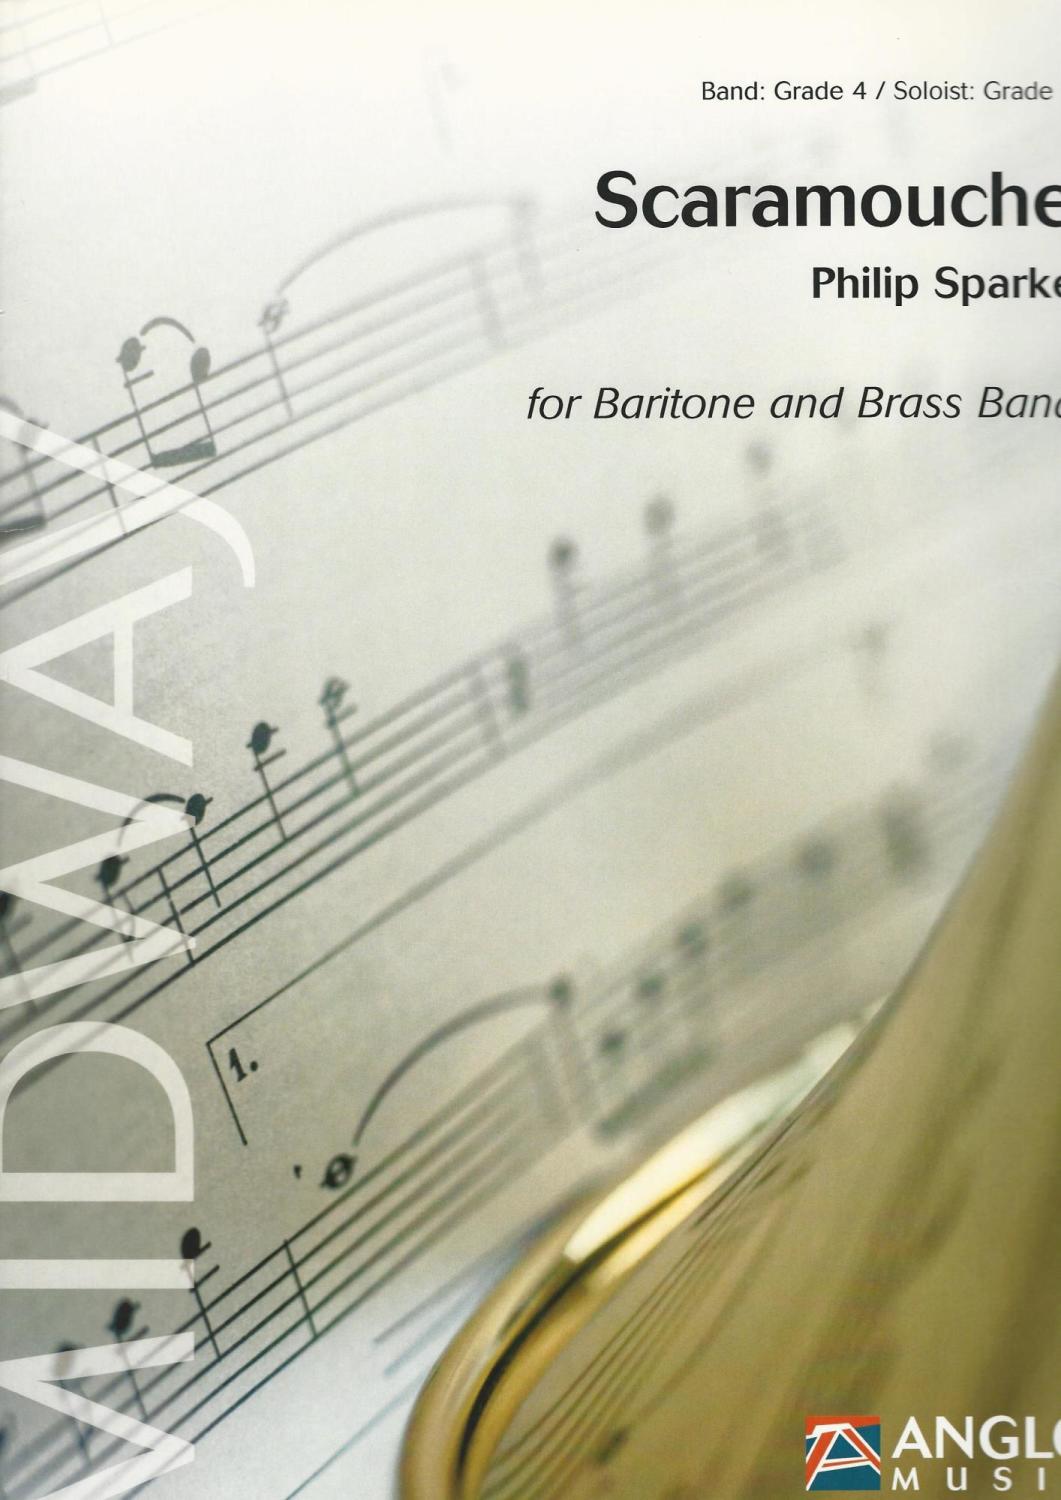 Scaramouche for Baritone and Brass Band - Philip Sparke